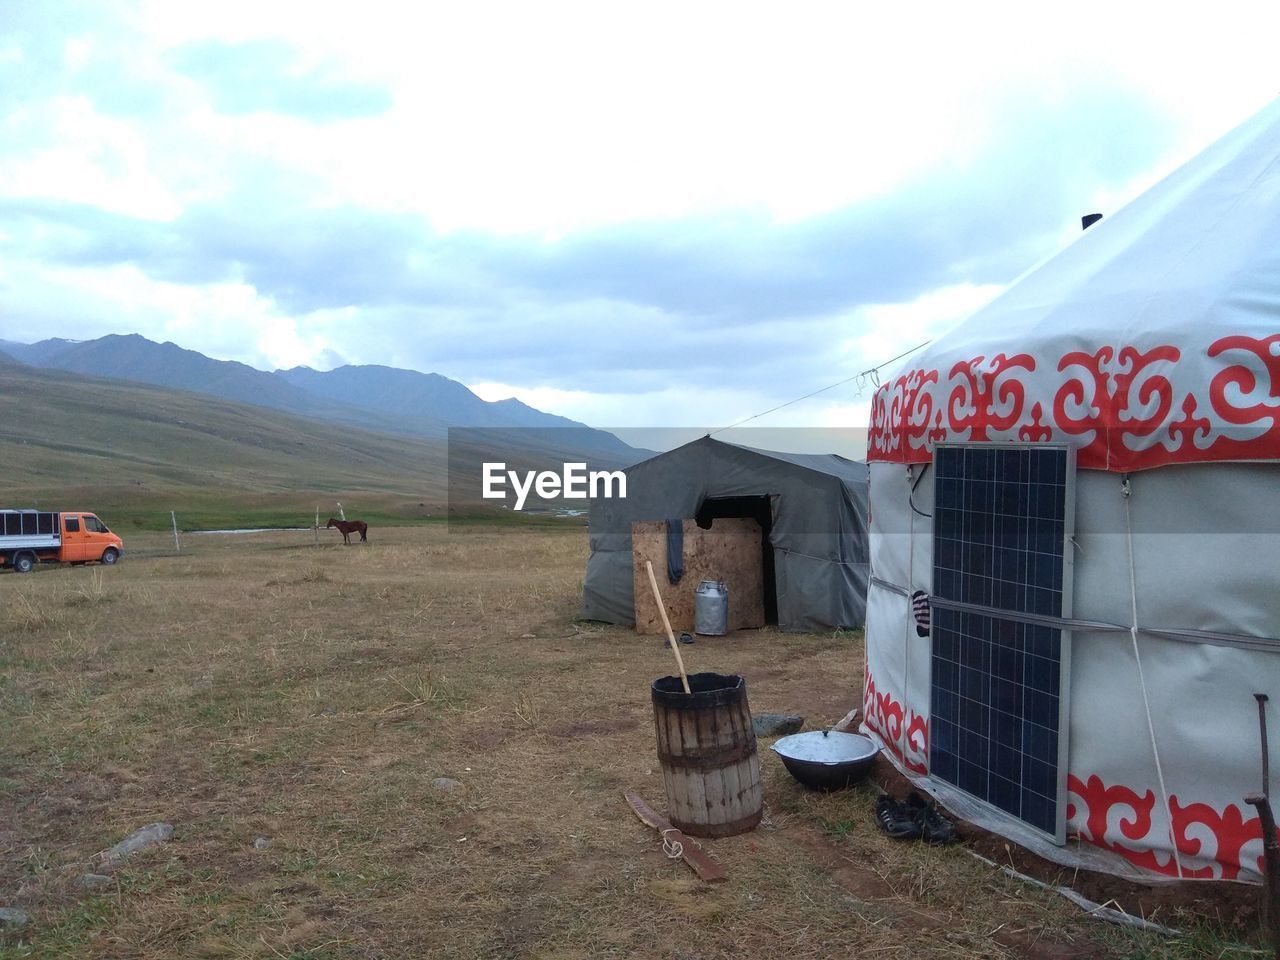 The modern kyrgyz yurt life